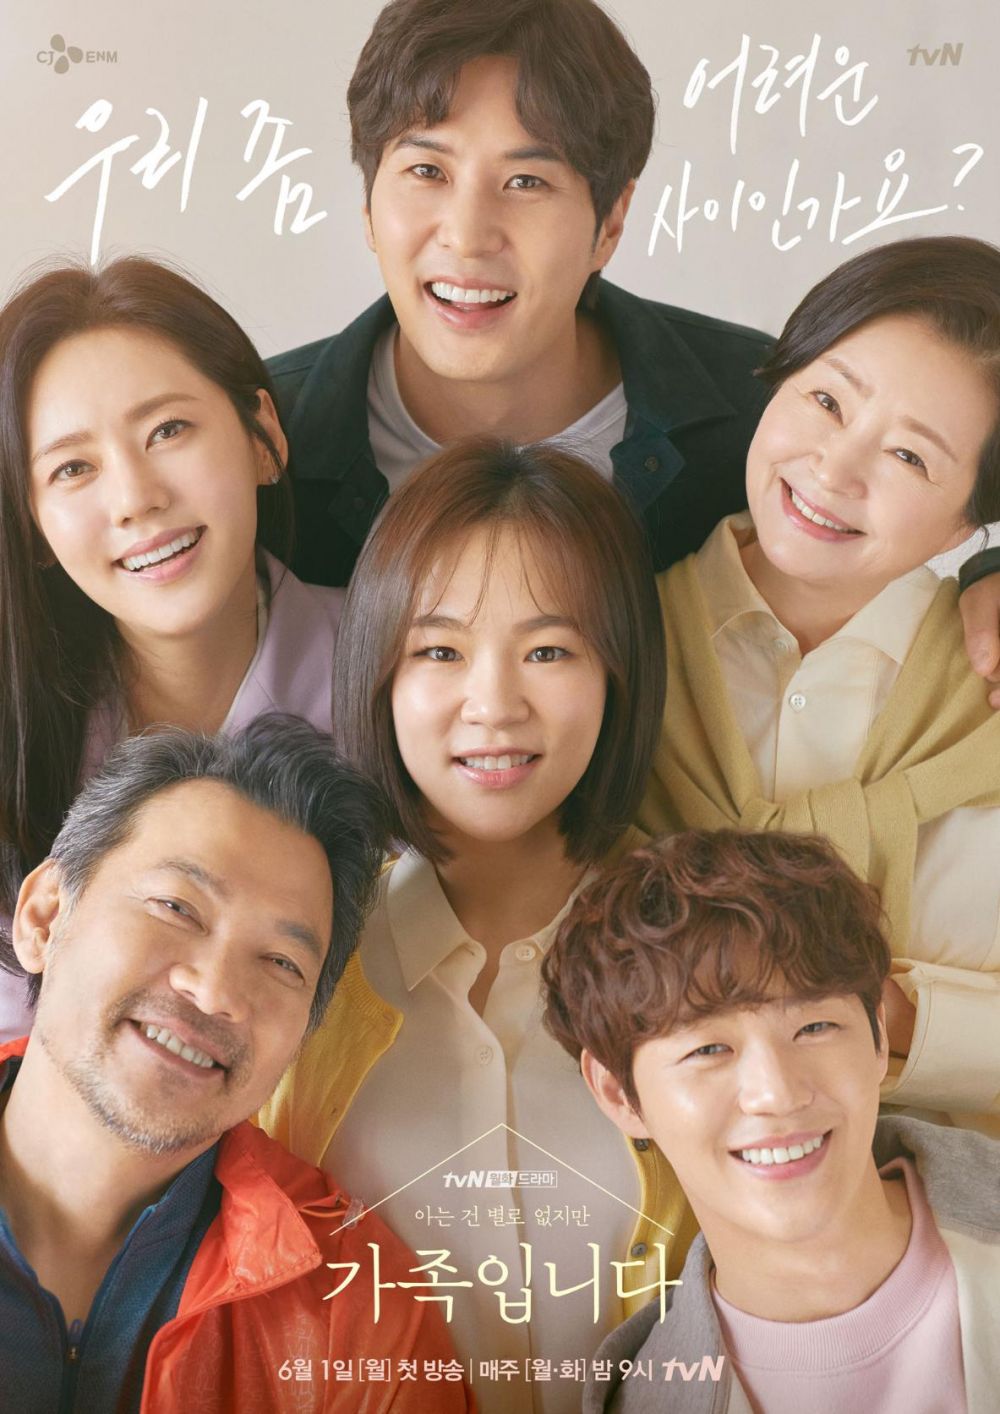 11 Drama Korea sedih tentang keluarga, dijamin bikin berurai air mata